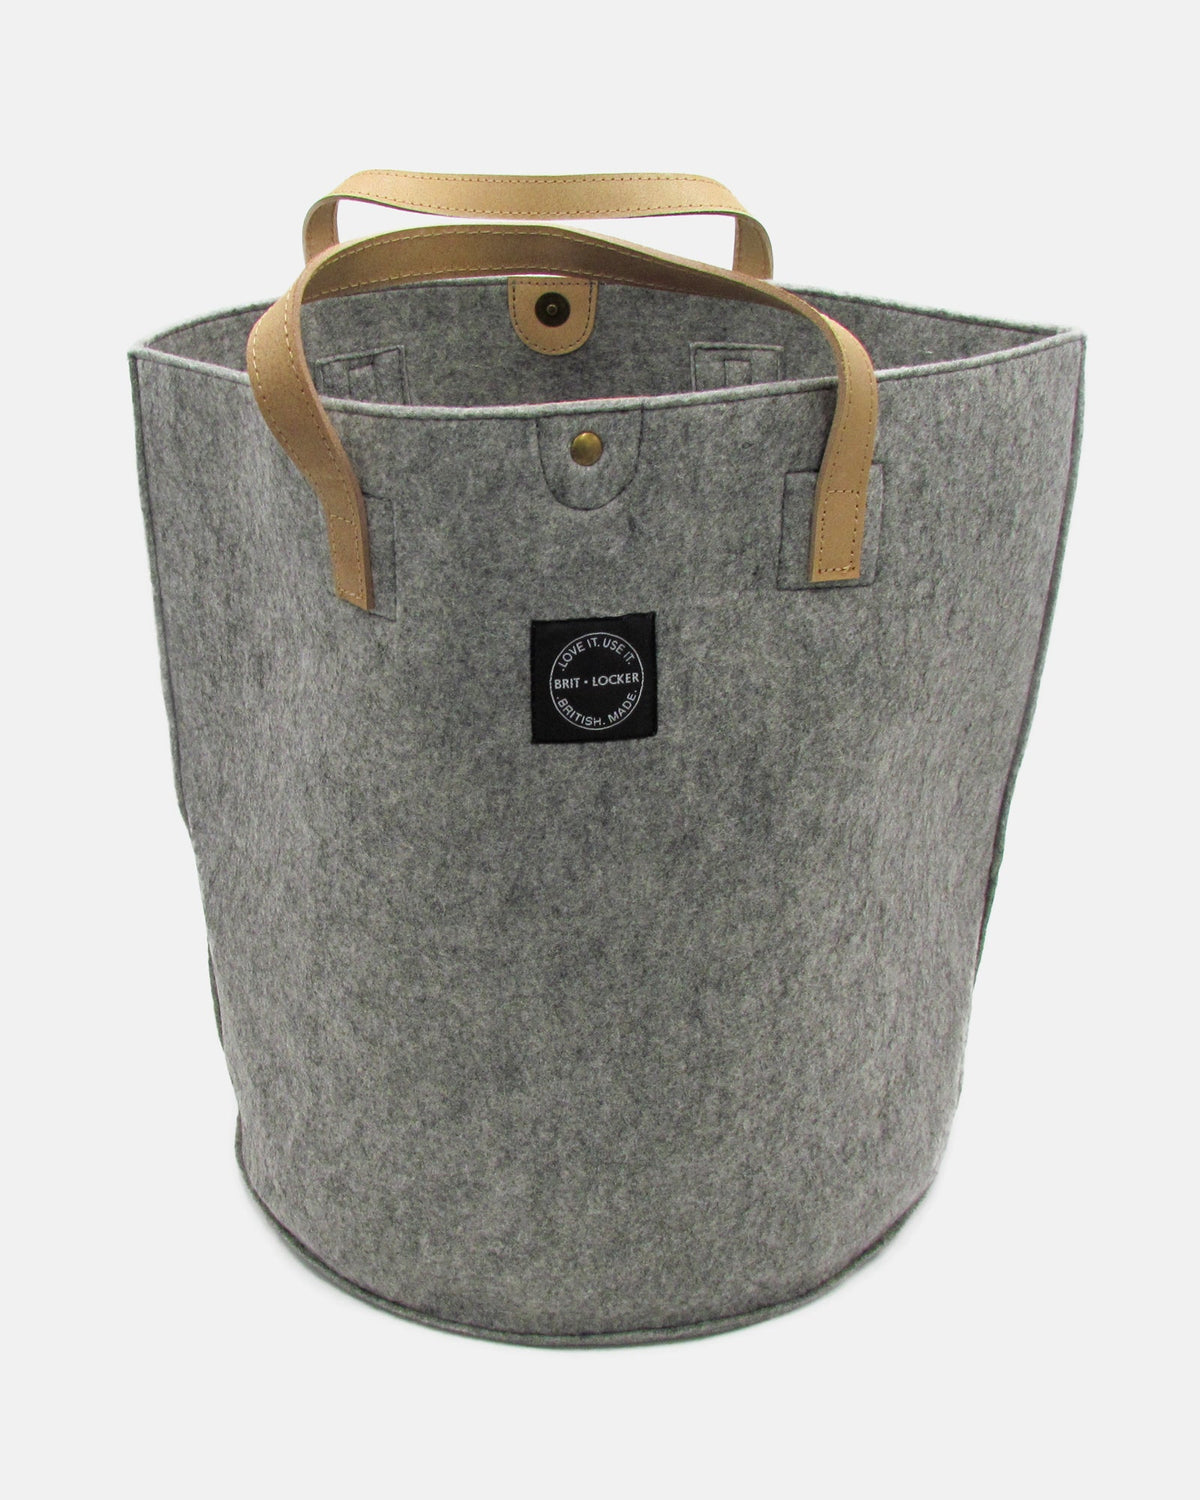 Felt Storage Basket with Leather Handles - Light Grey - BRIT LOCKER